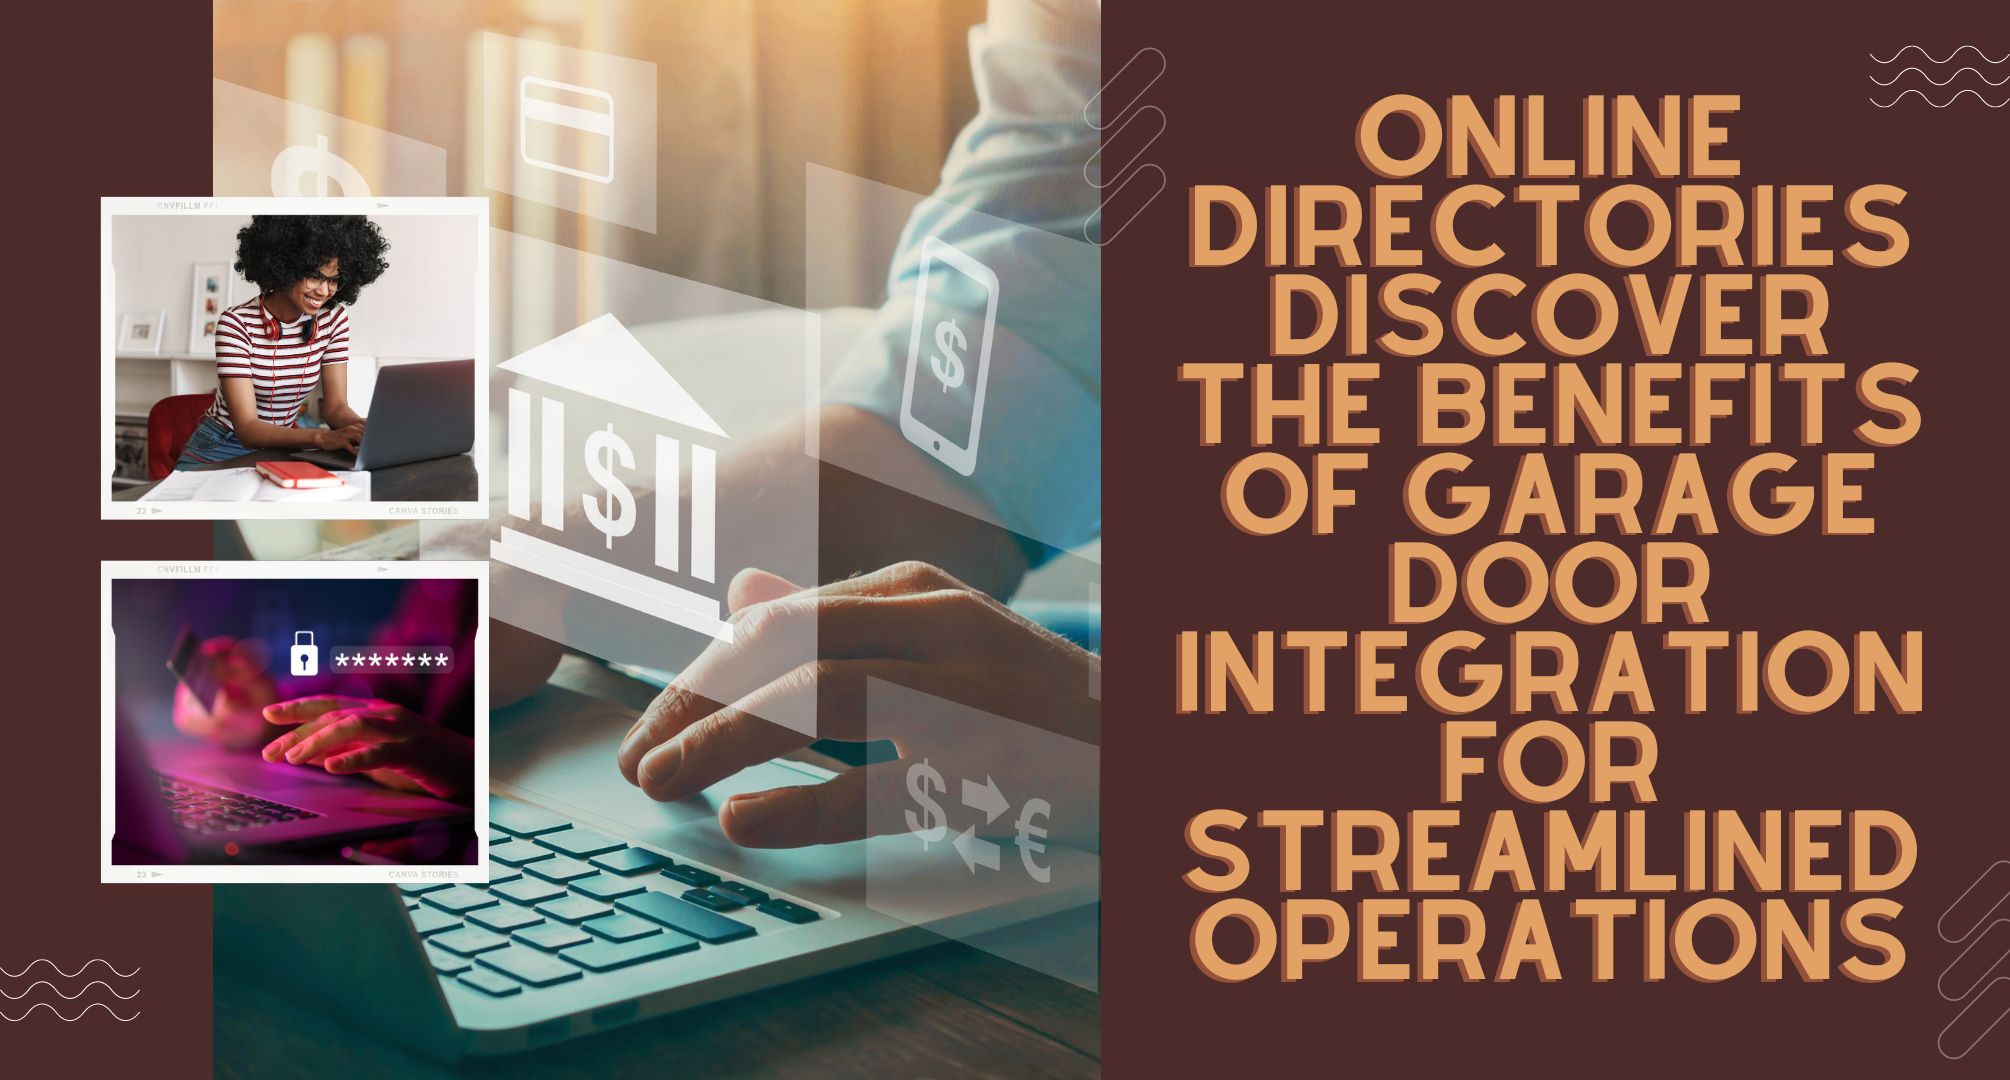 Online Directories Discover the Benefits of Garage Door Integration for Streamlined Operations